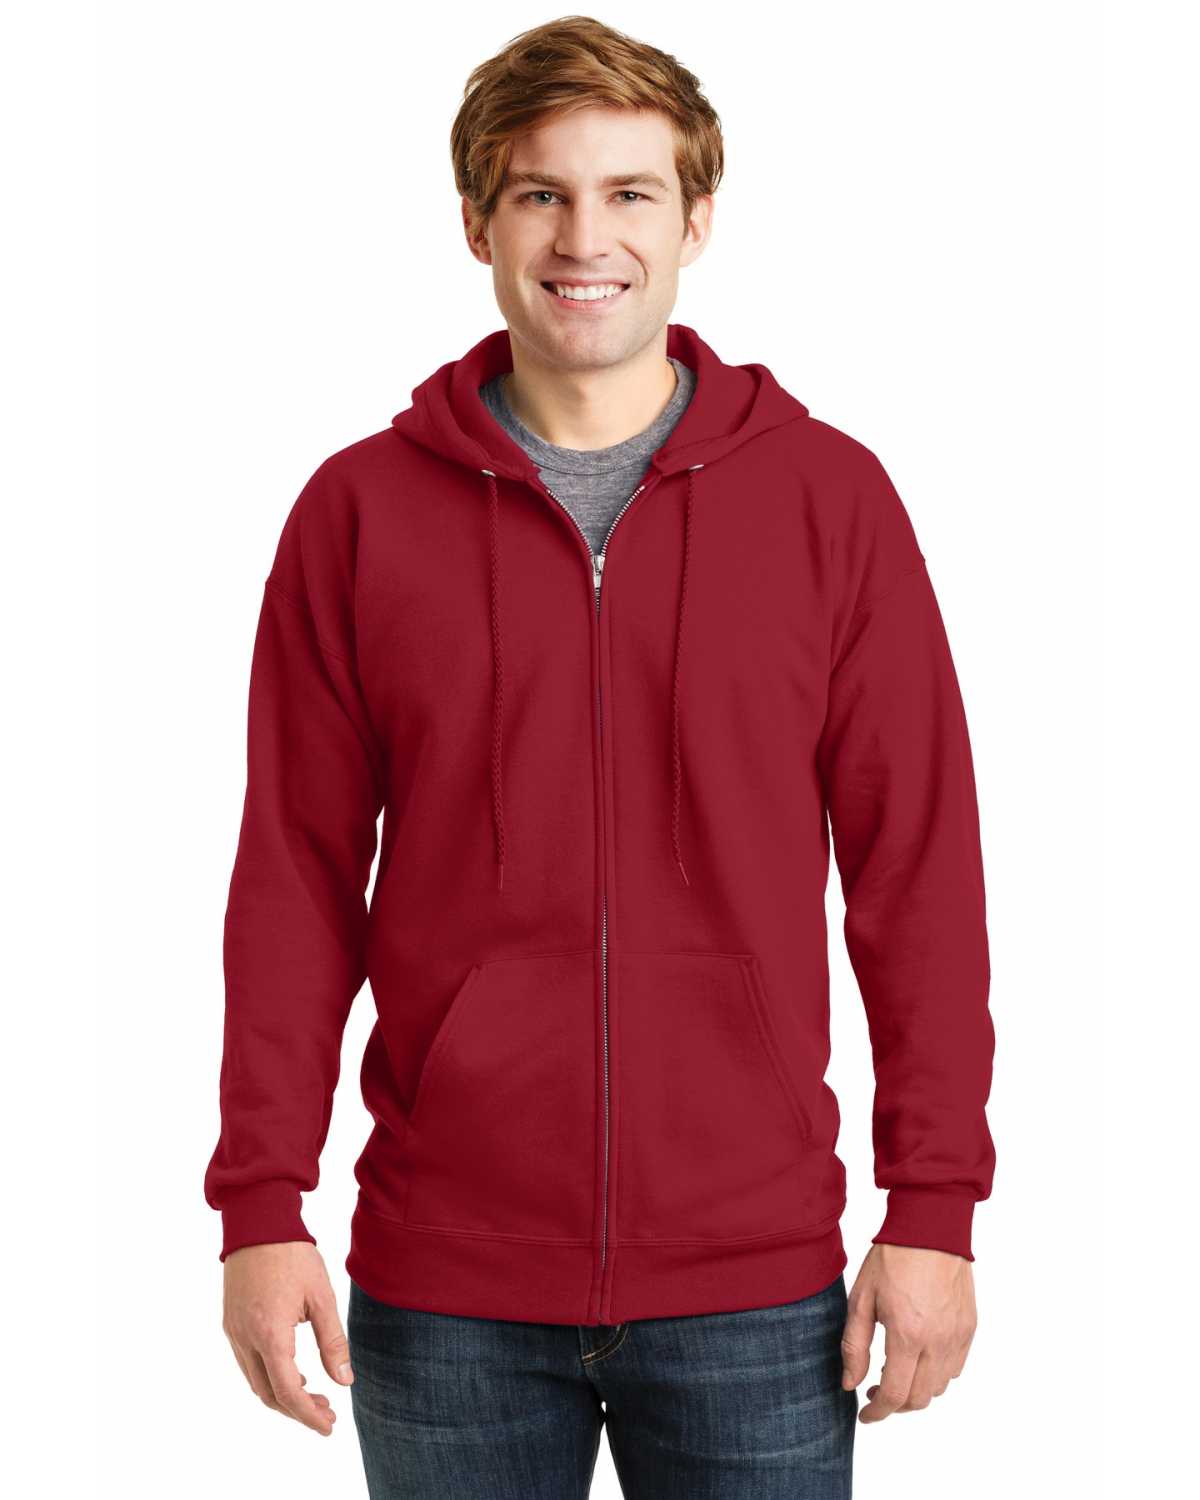 Hanes F283 Ultimate Cotton Full-Zip Hooded Sweatshirt on discount ...